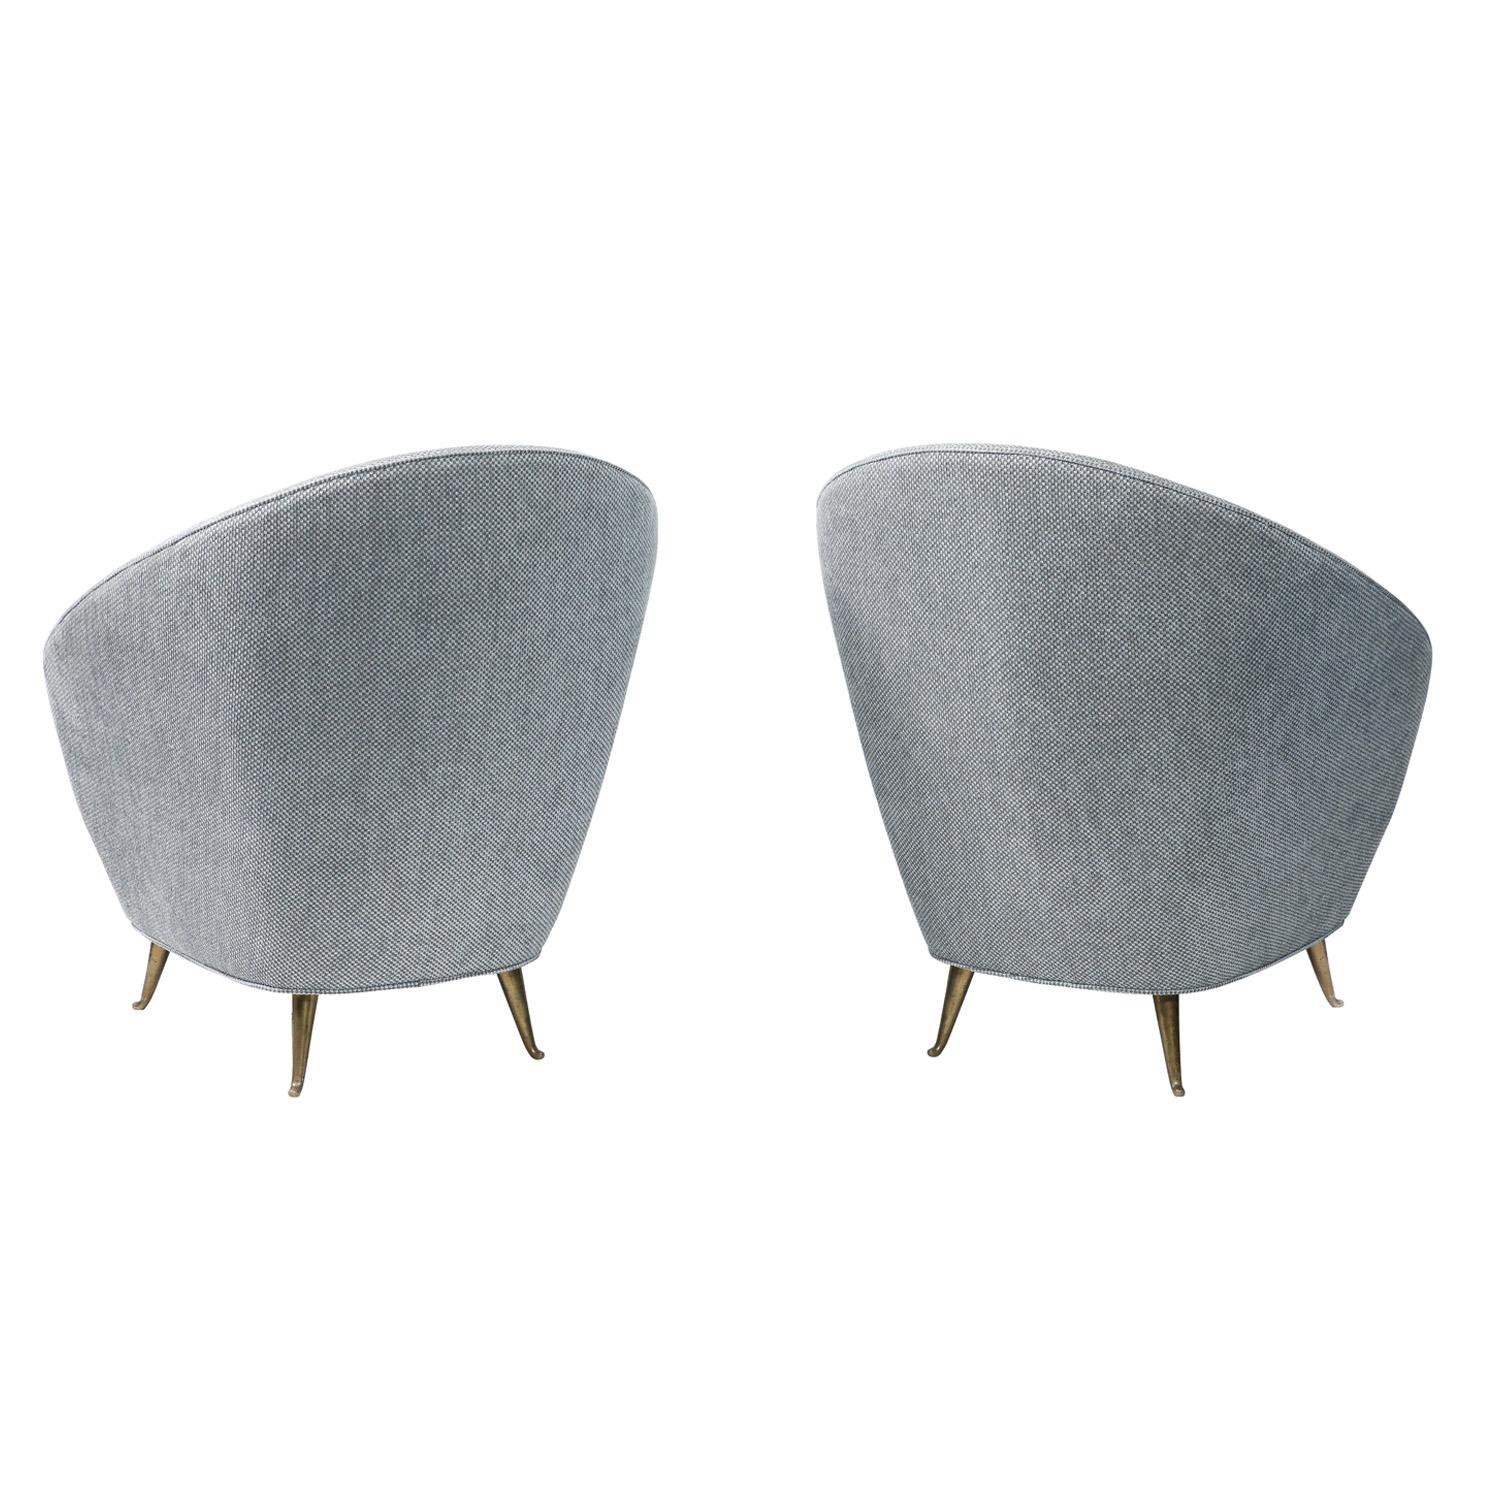 Mid-Century Modern Italian Pair of Elegant Lounge Chairs with Brass Legs 1950s